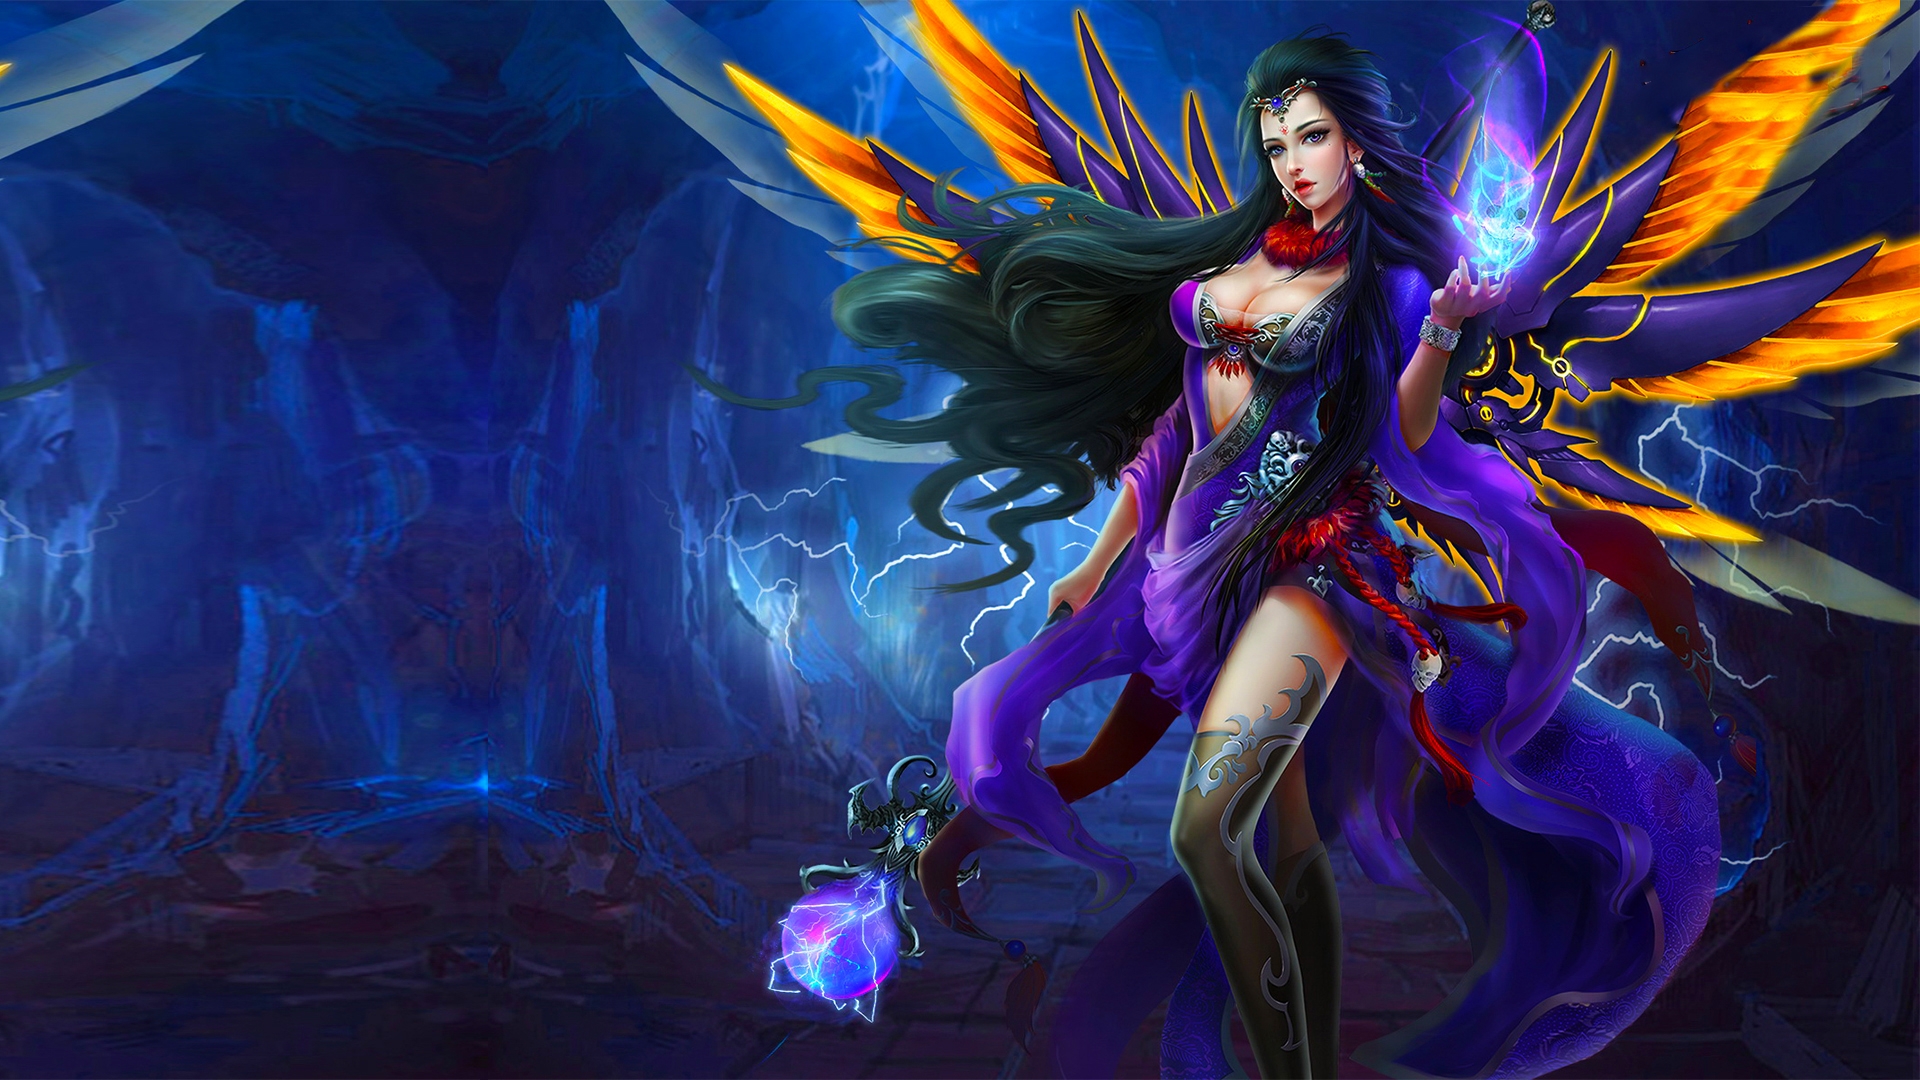 Wallpaper Fantasy girl with wings, magic wand